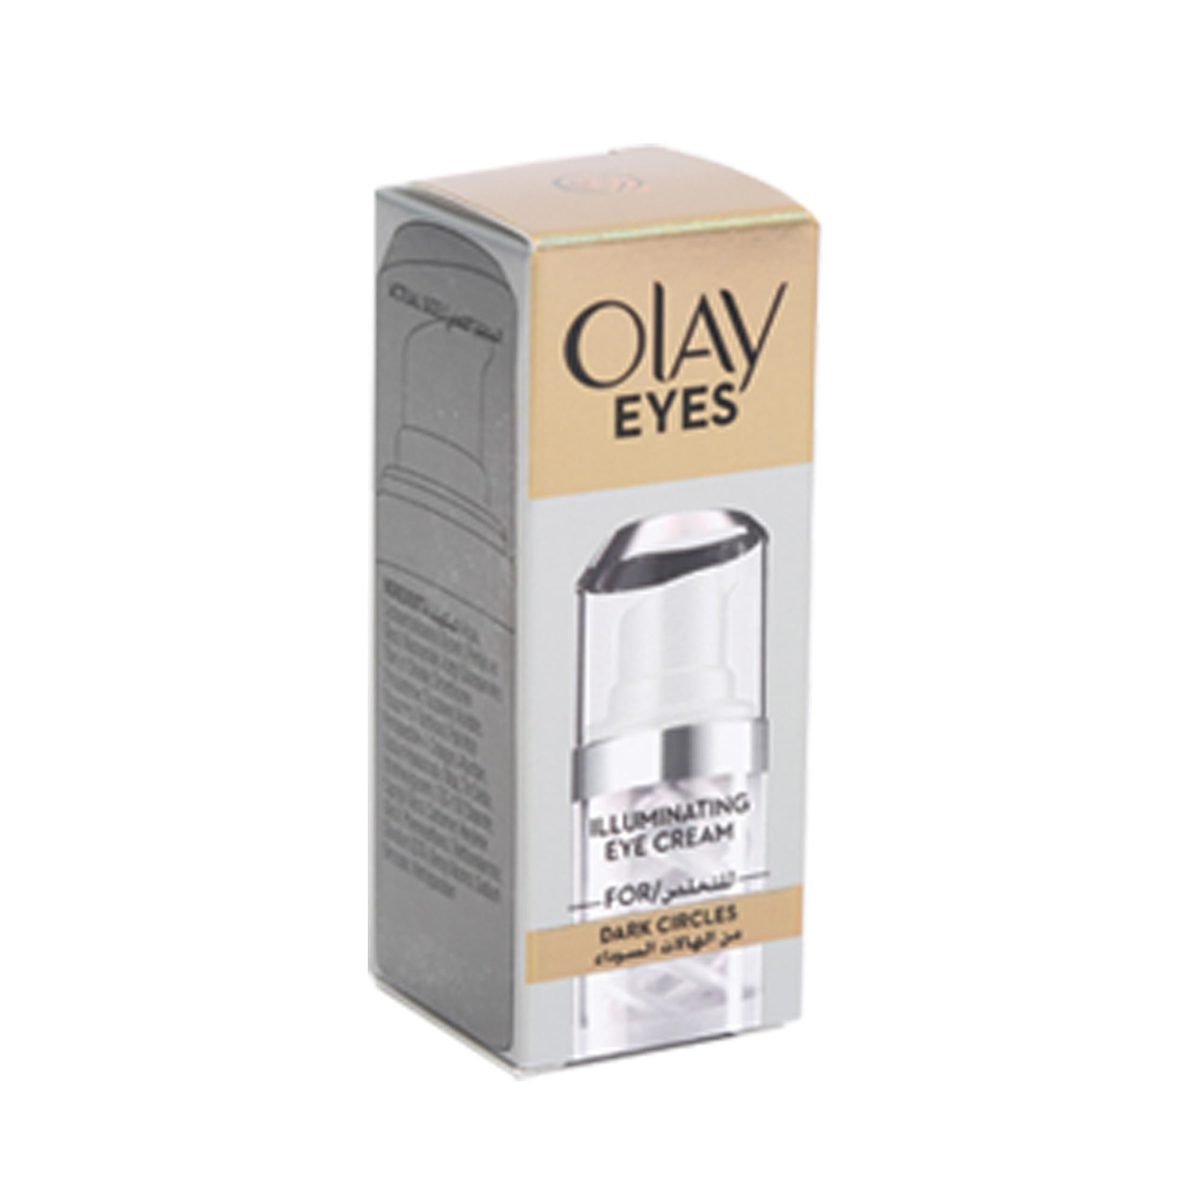 Olay Eyes Illuminating Eye Cream 15 ml